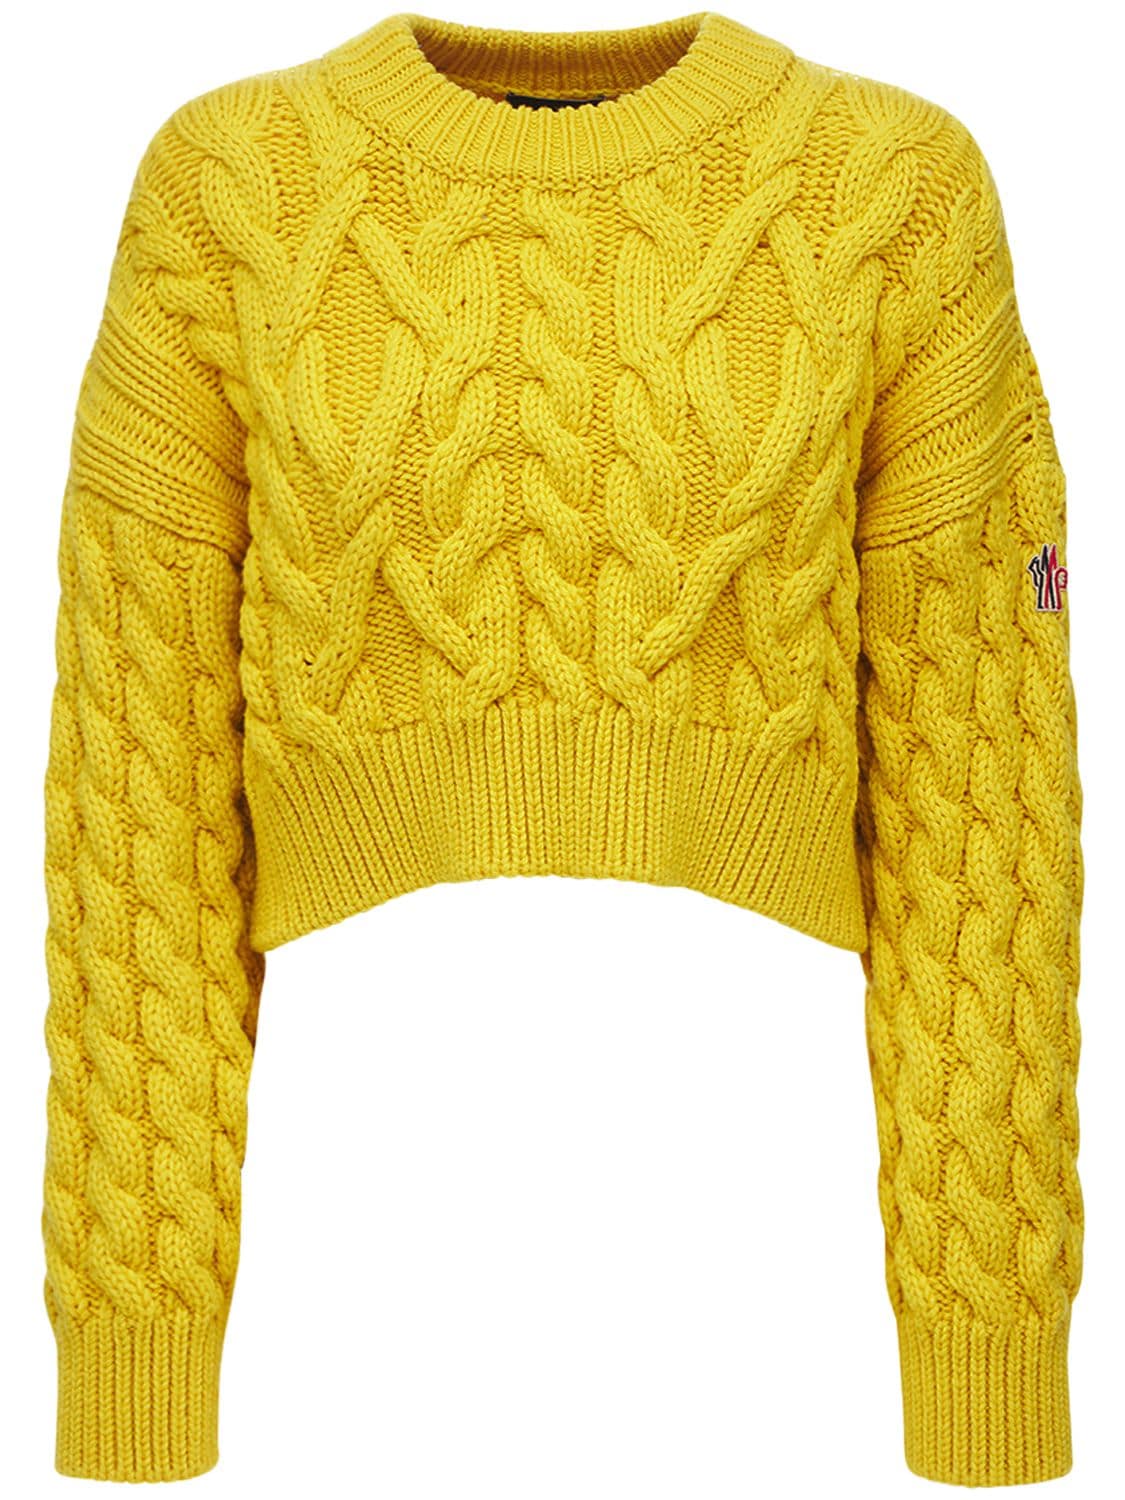 Braided Wool Knit Sweater